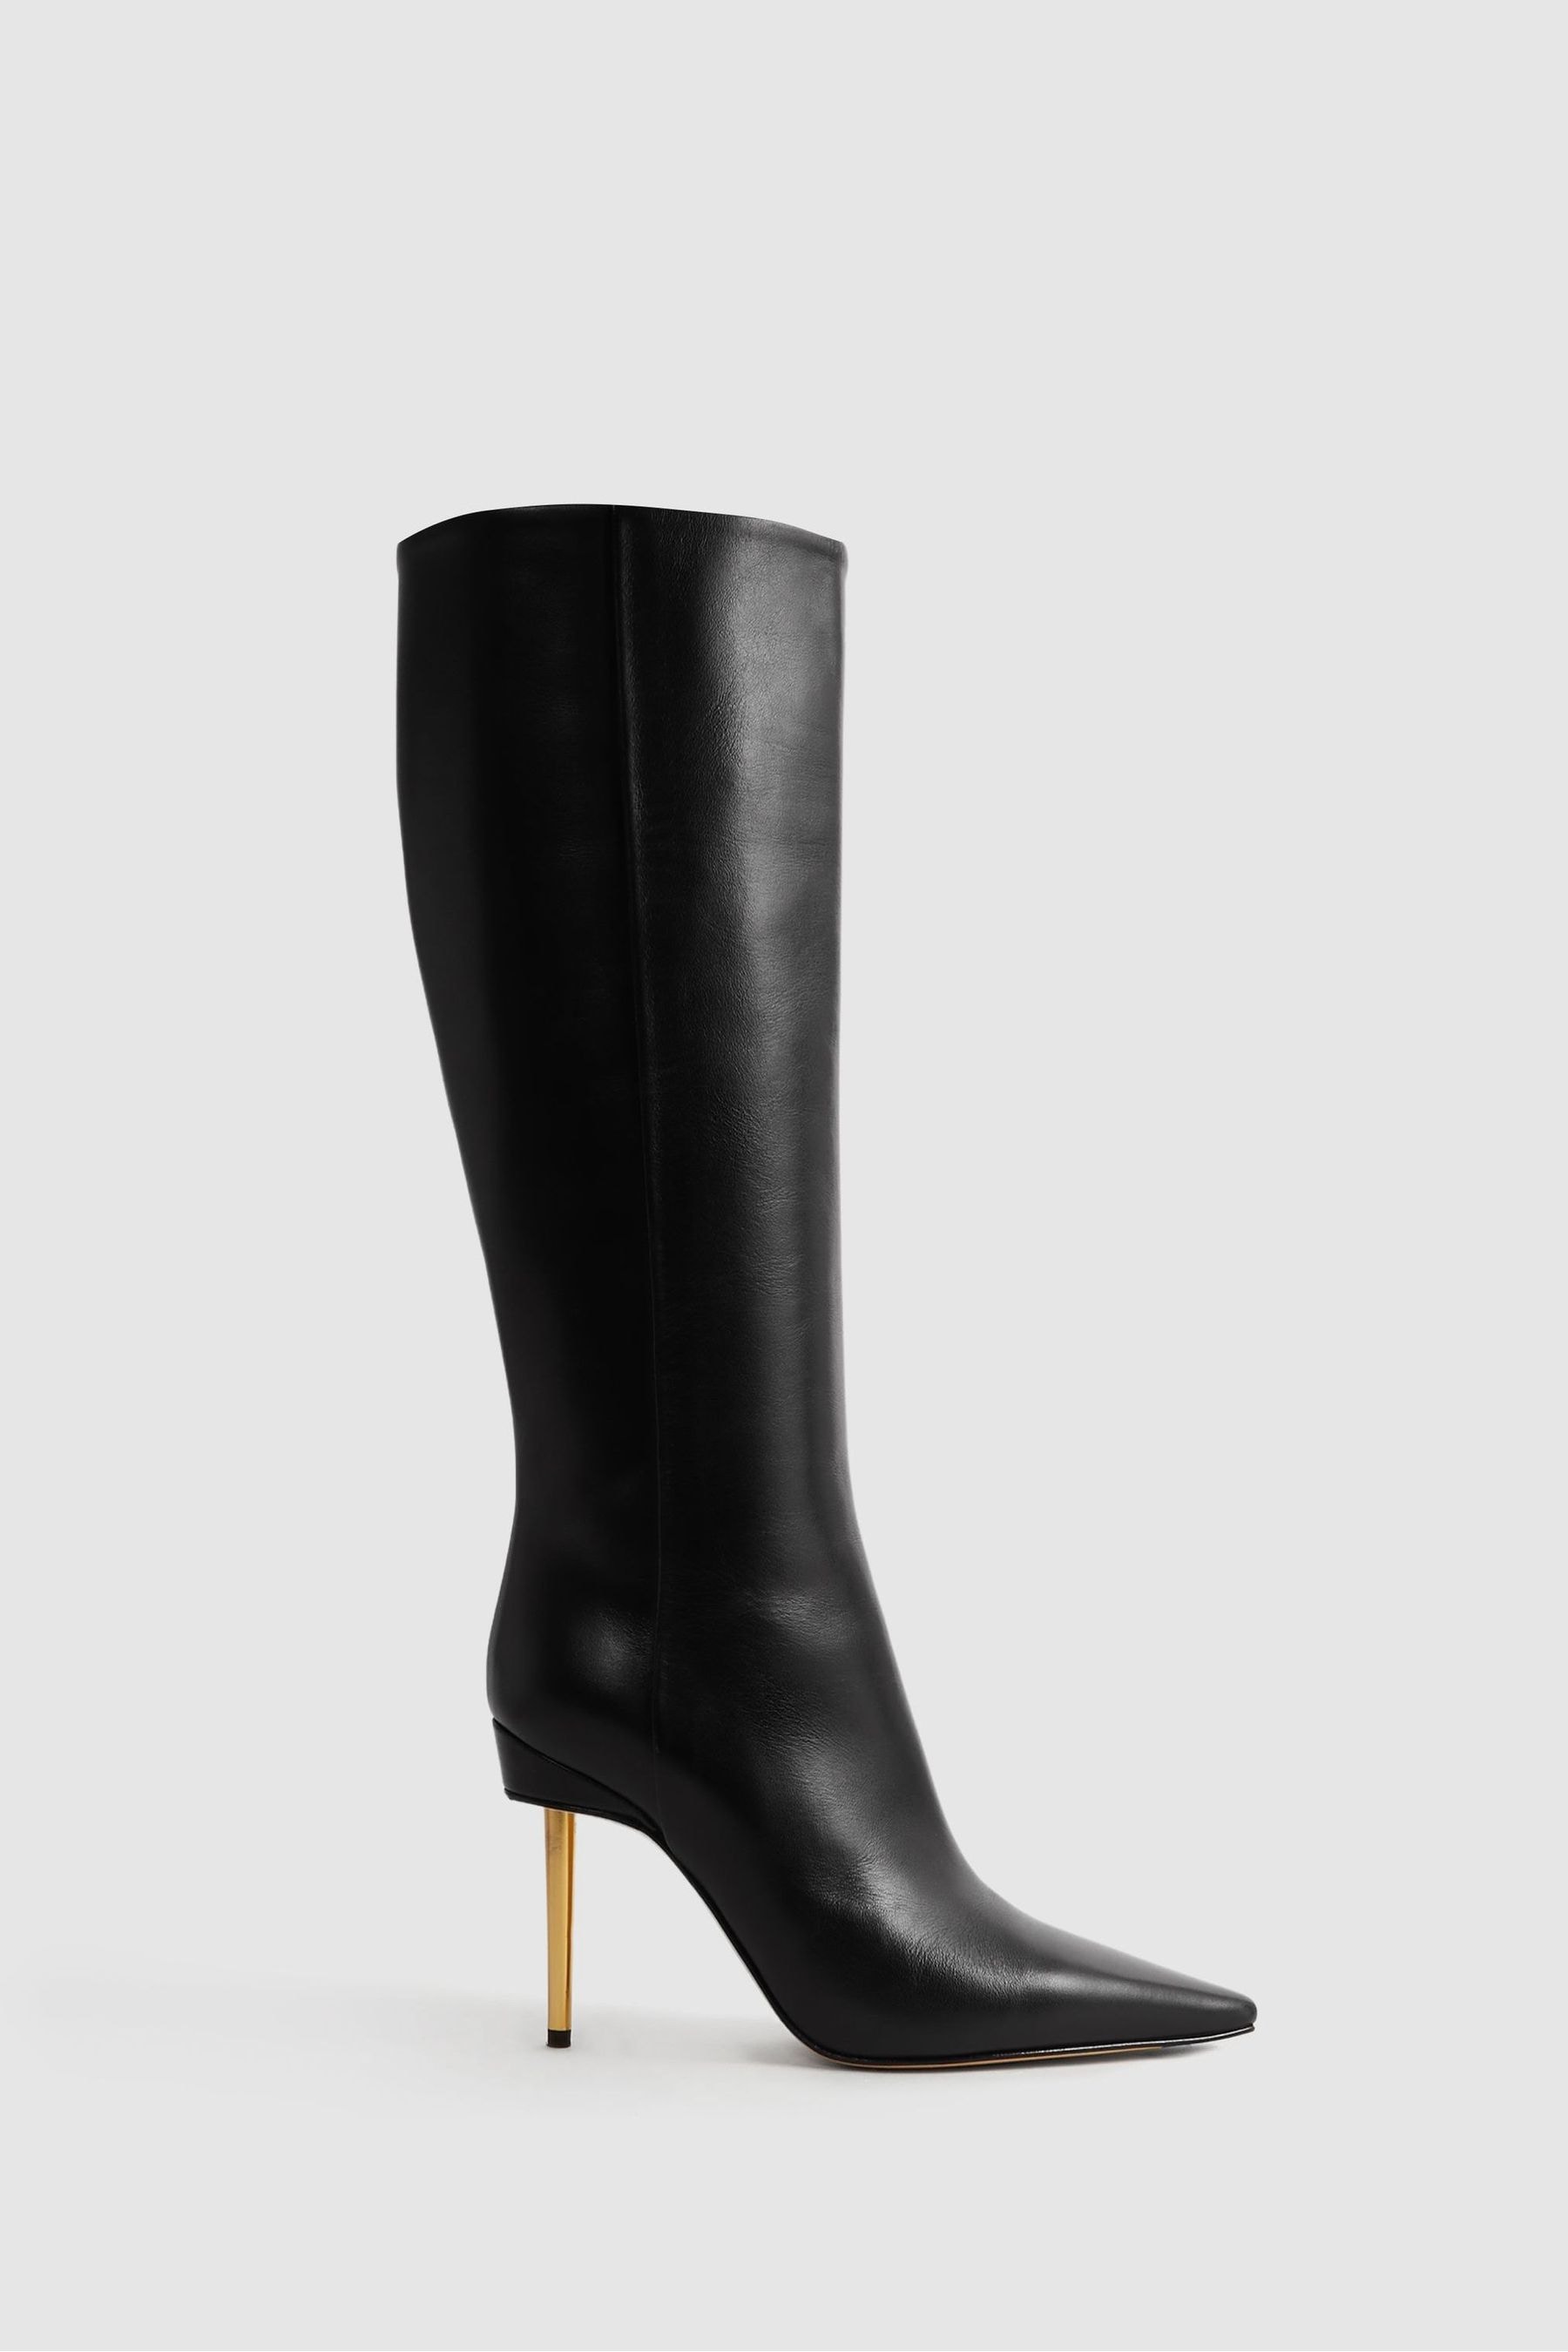 Reiss Naomi - Black Italian Leather Heeled Knee-high Boots, Us 5